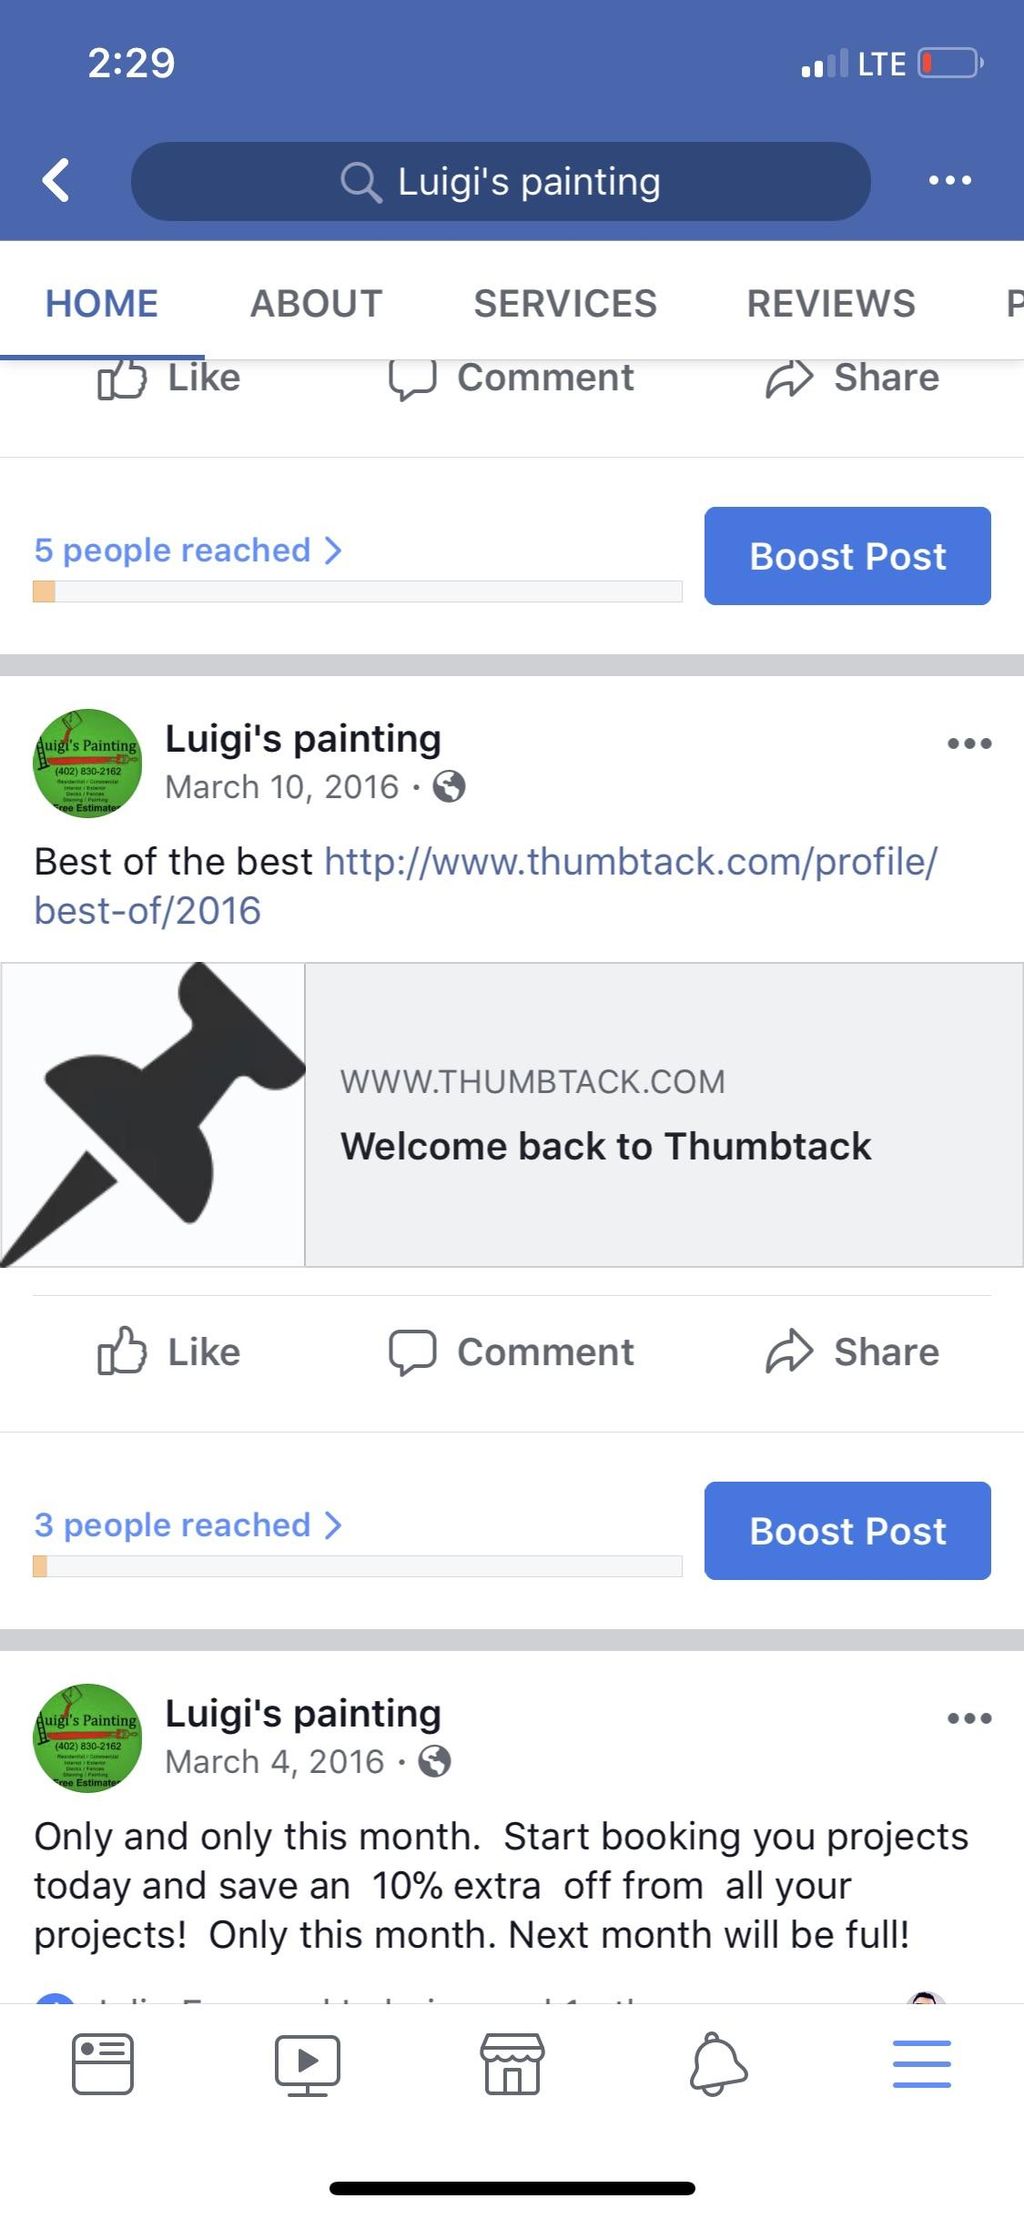 Luigi’s Painting